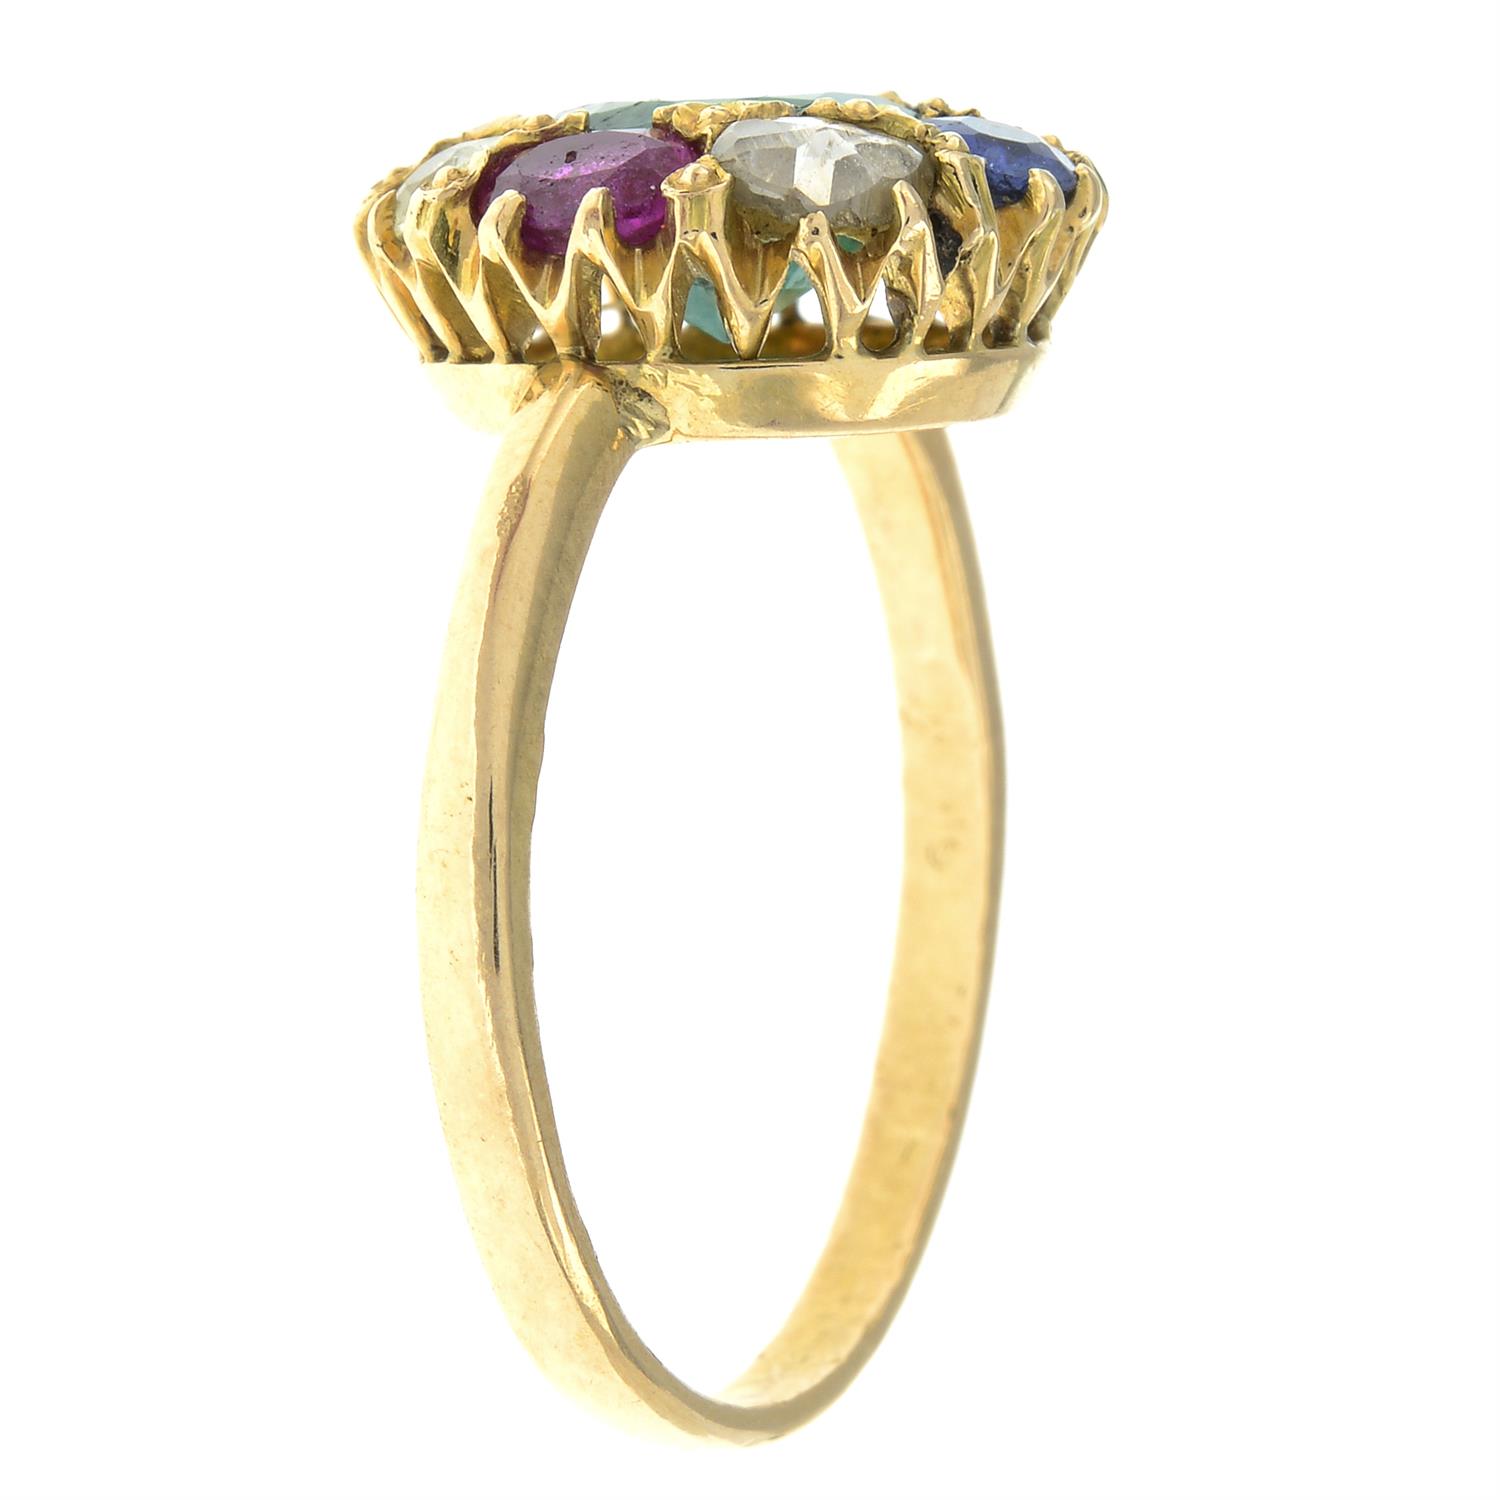 19th century gold navaratna ring - Image 4 of 5